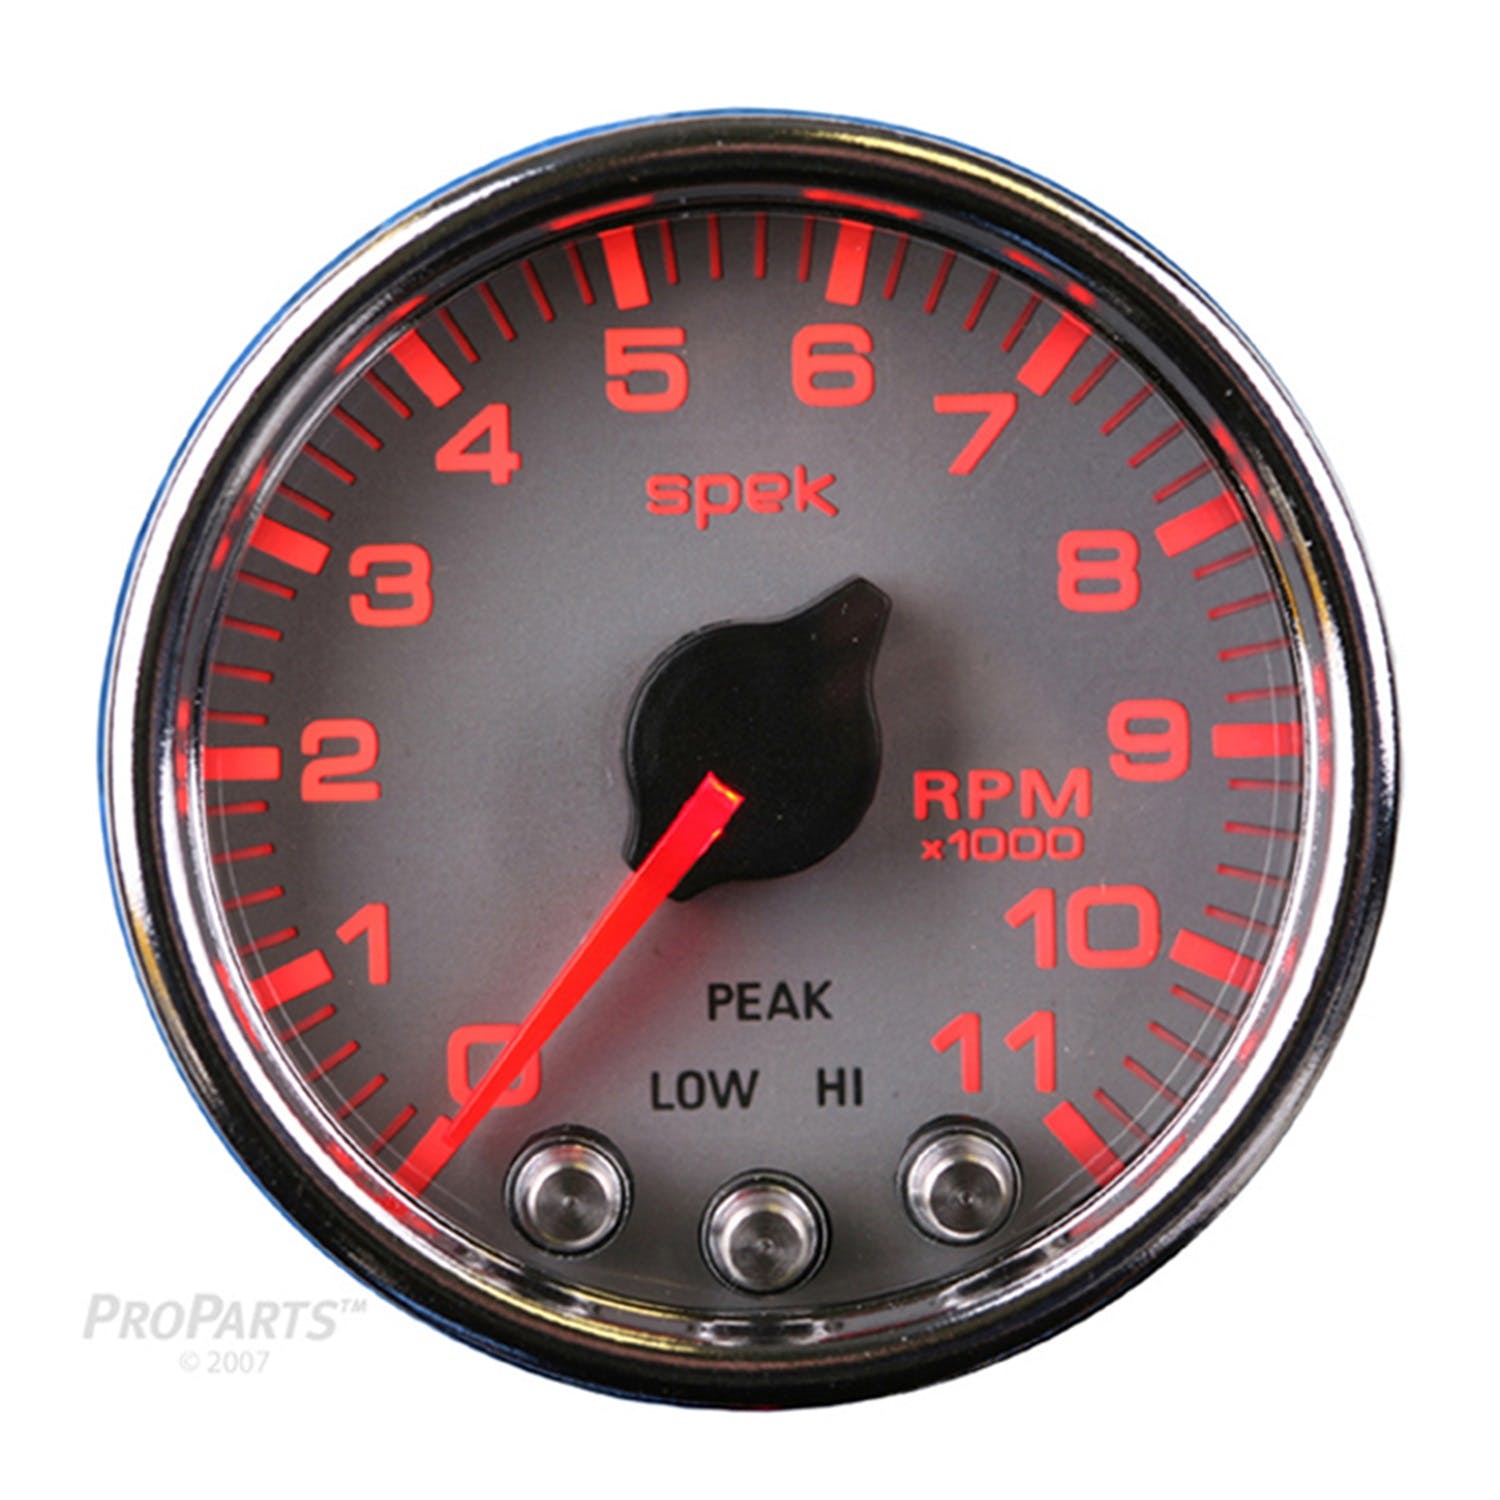 AutoMeter Products P33621 Tach 2in. 11k RPM w Shift Light/Pk Mem Slvr/Chrm Spek